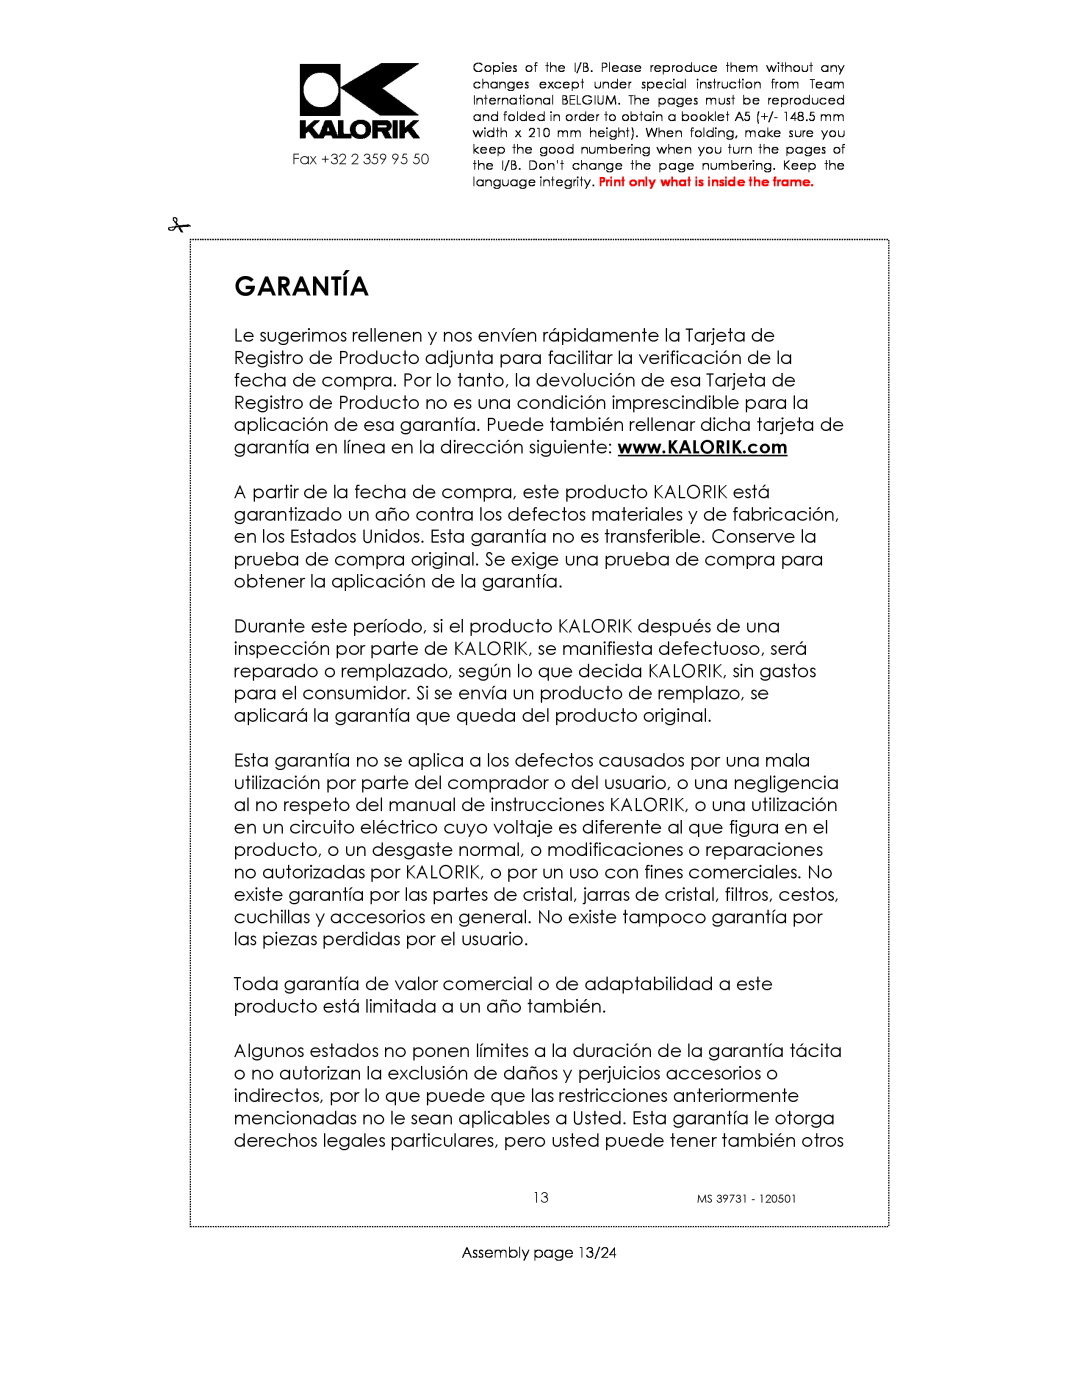 Kalorik MS 39731 manual Garantía, Fax +32, Assembly page 13/24 